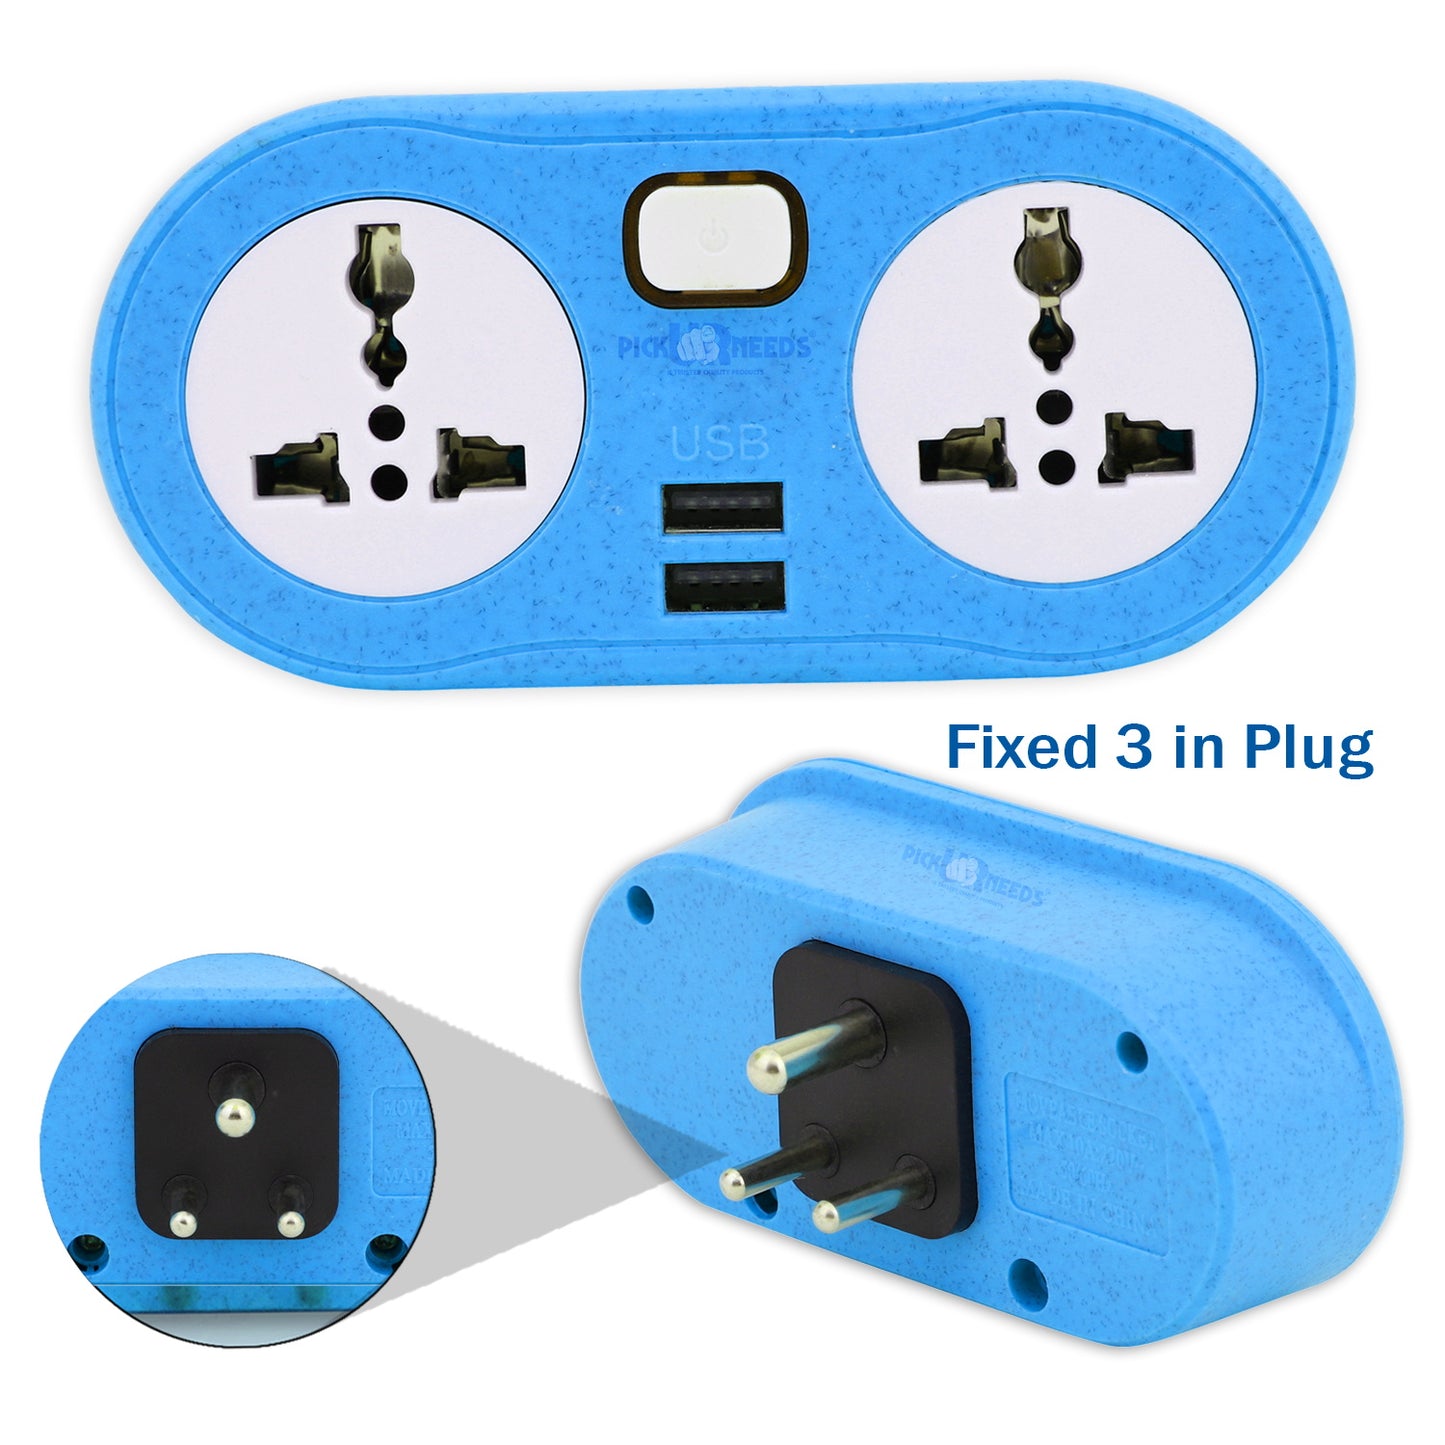 Pick Ur Needs Portable 2 USB Port & 2 USB Universal Socket Extension Boards for Multipurpose Use